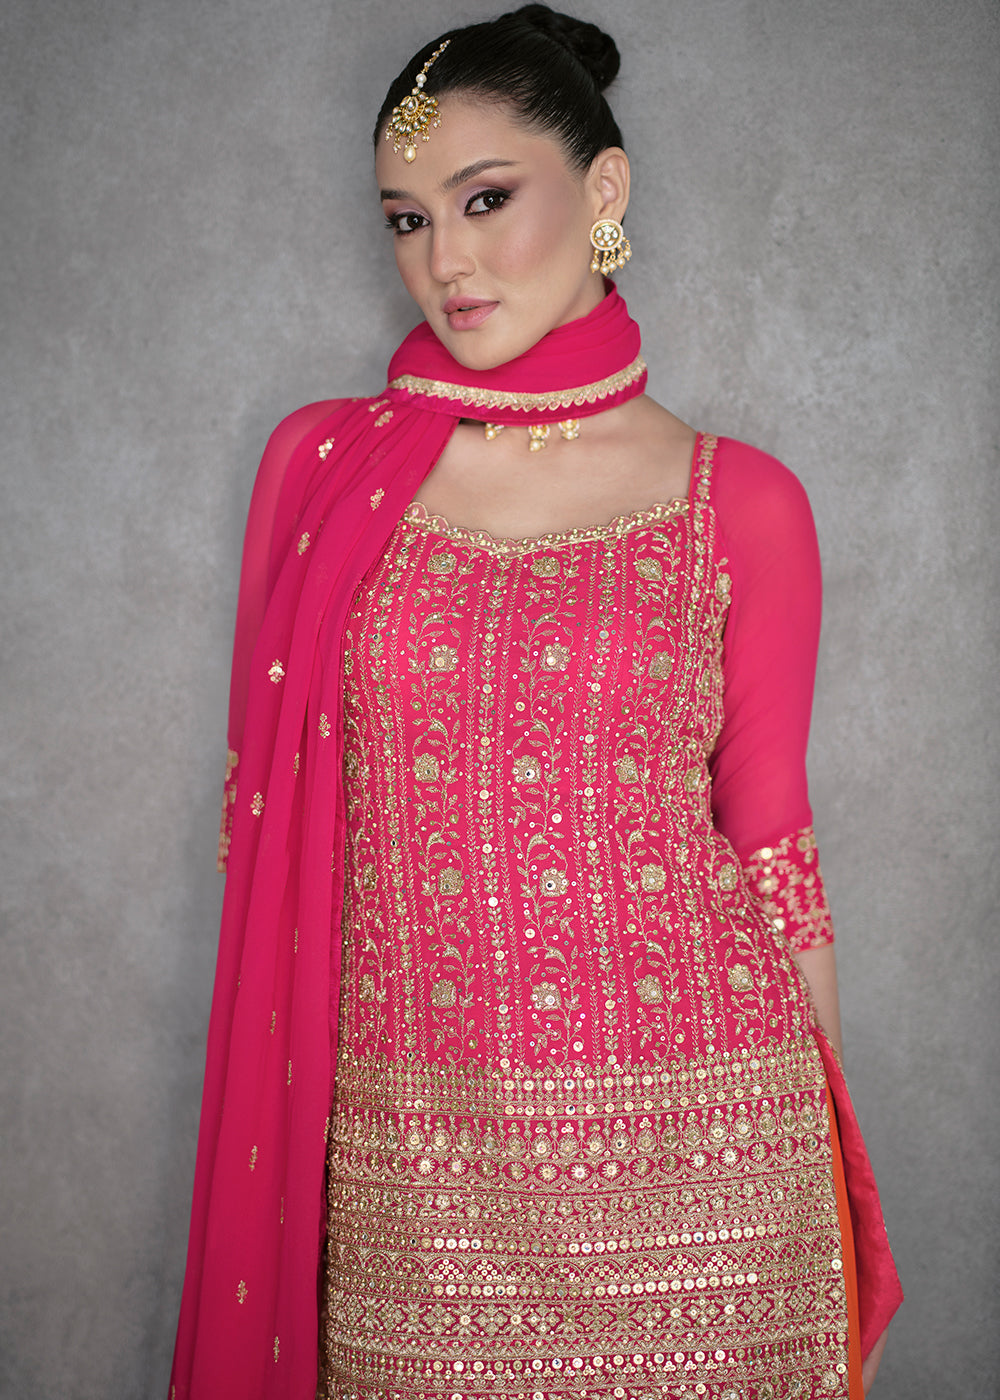 Indian Mens Wedding Wear Bollywood Party Wear Semi Indo Western Dress From  India | eBay